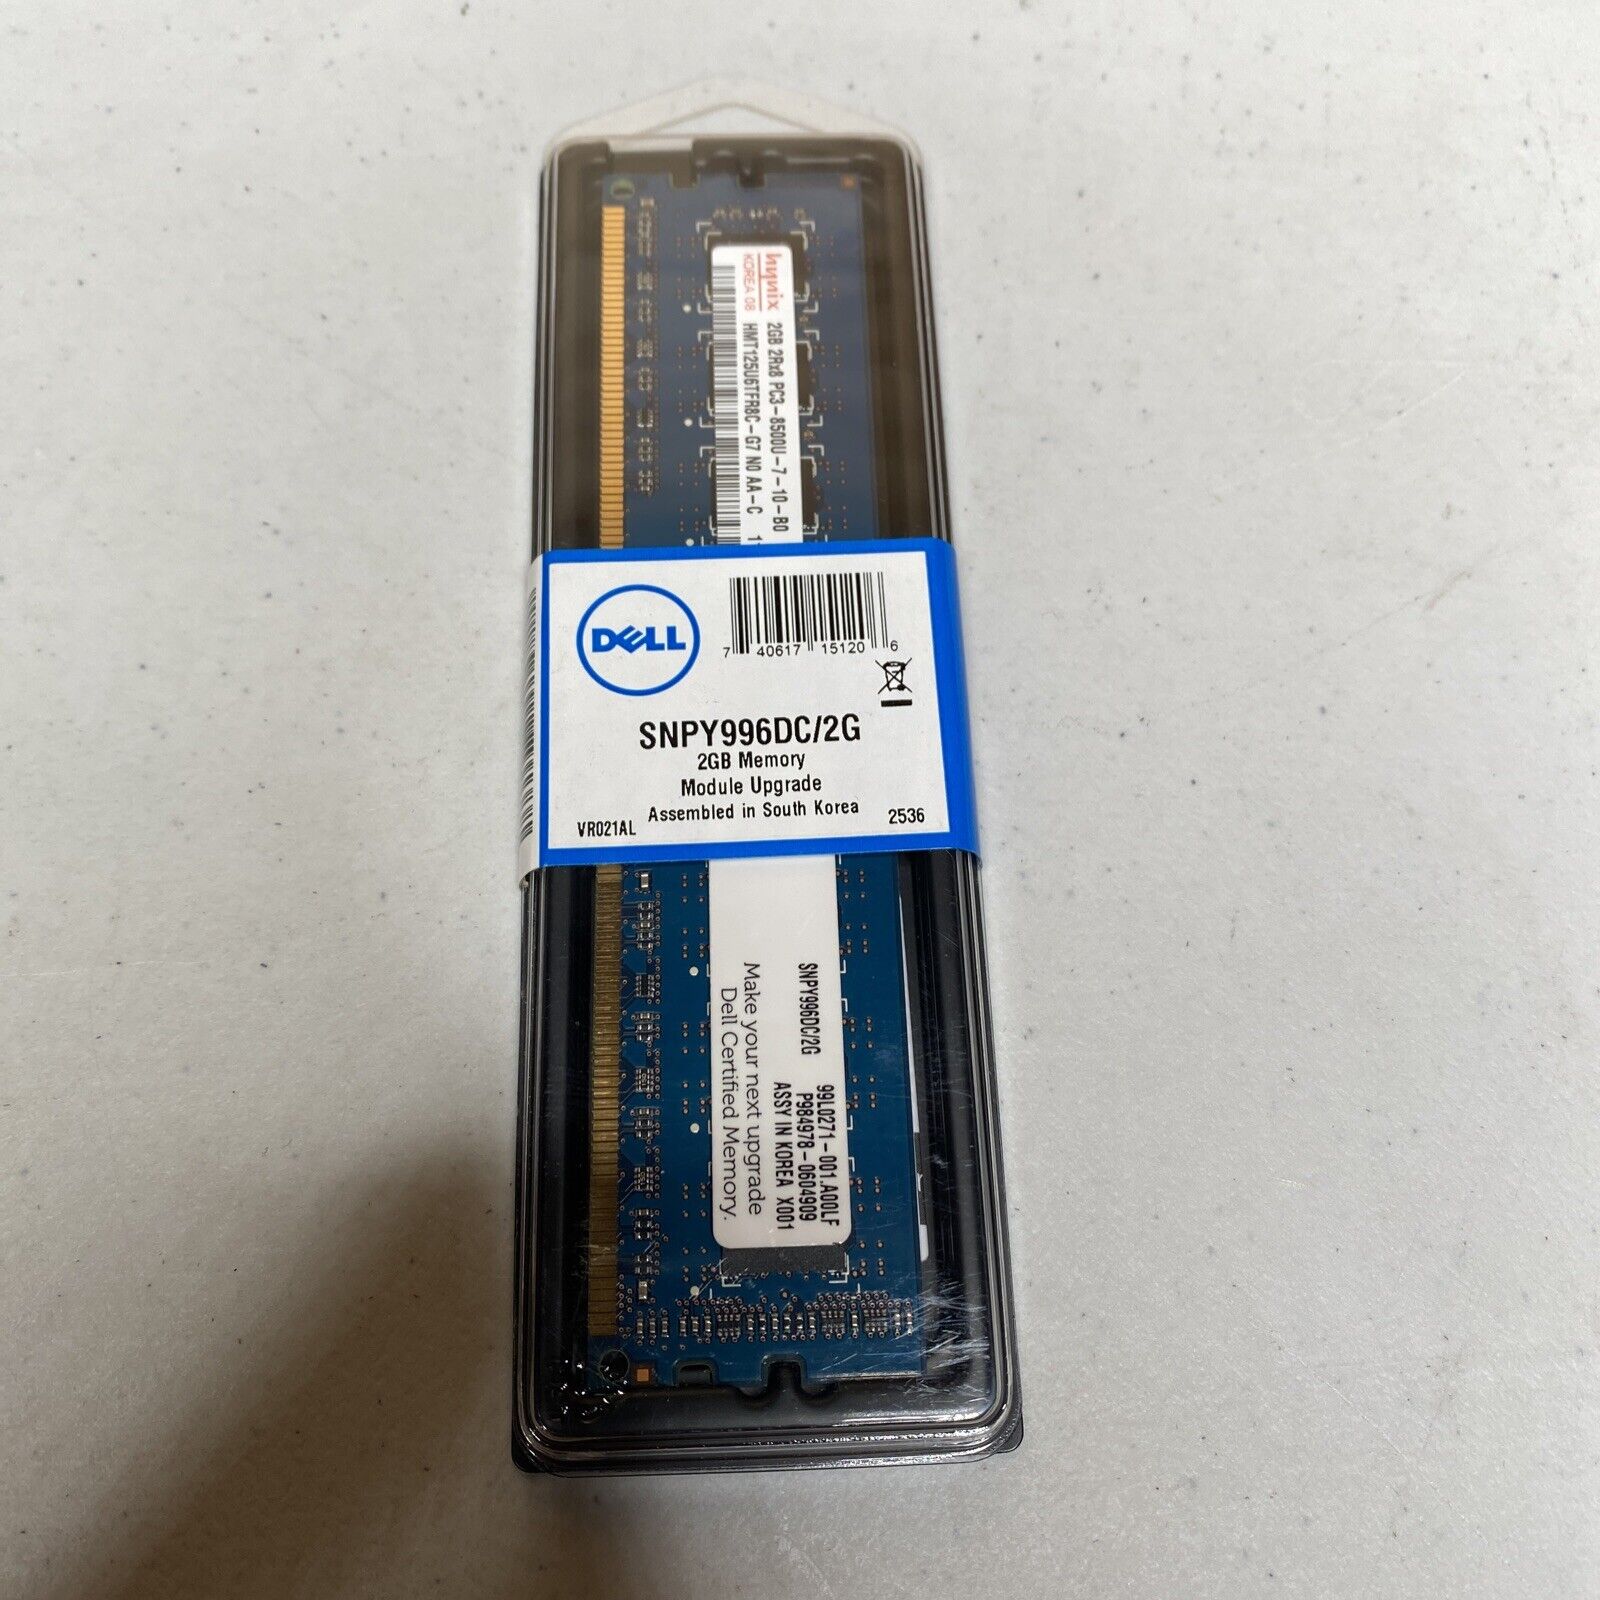 Dell PC3-8500 2 GB DIMM 1066 MHz DDR3 SDRAM Memory (SNPY996DC/2G)